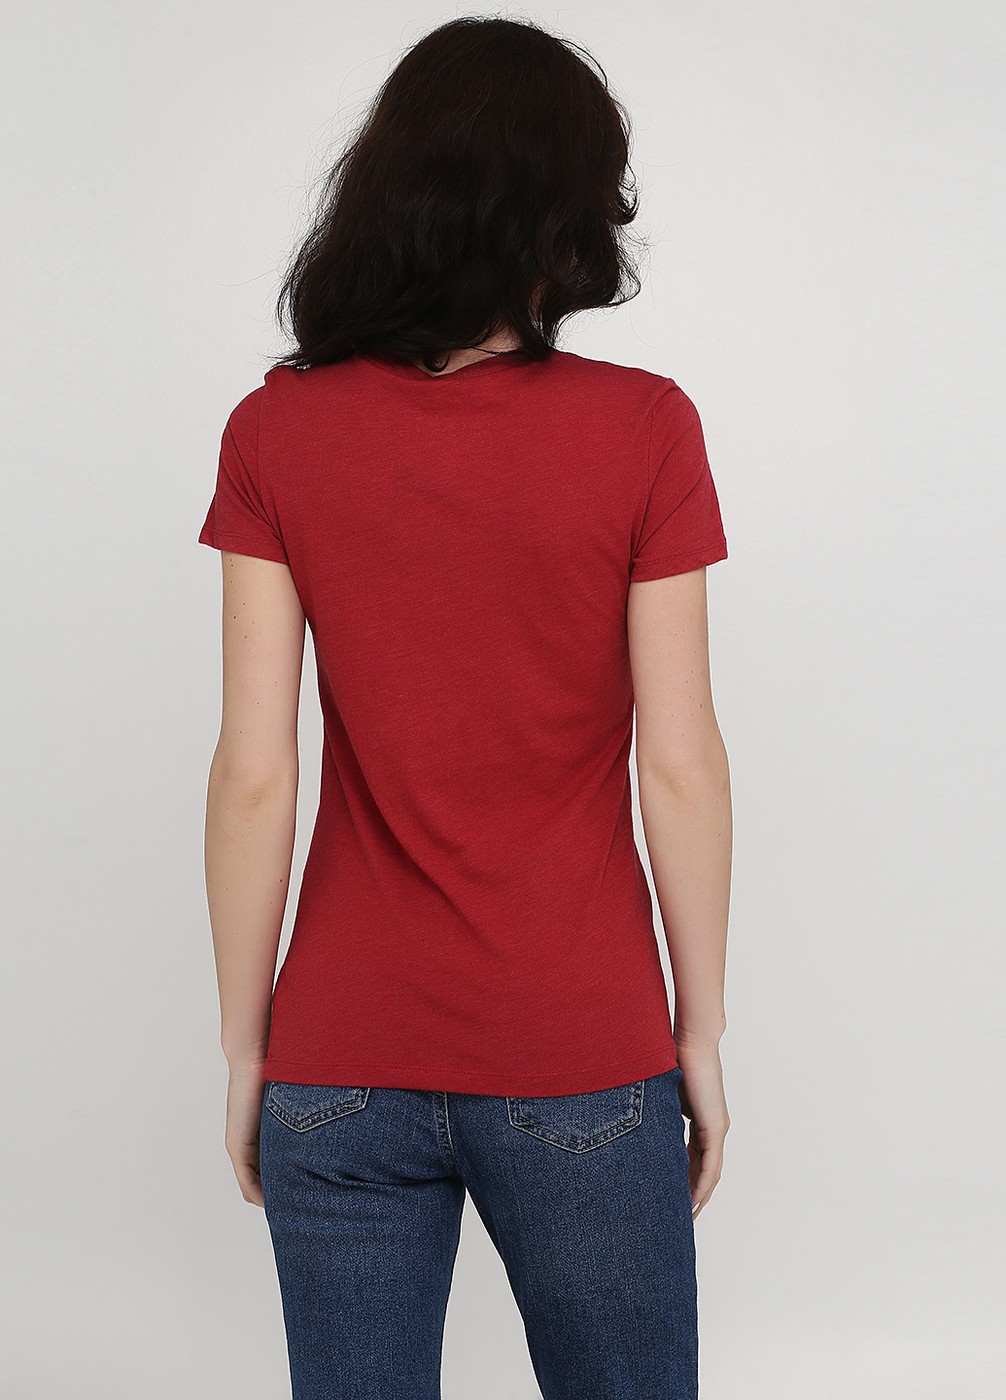 Красная футболка - женская футболка Aeropostale, S, S